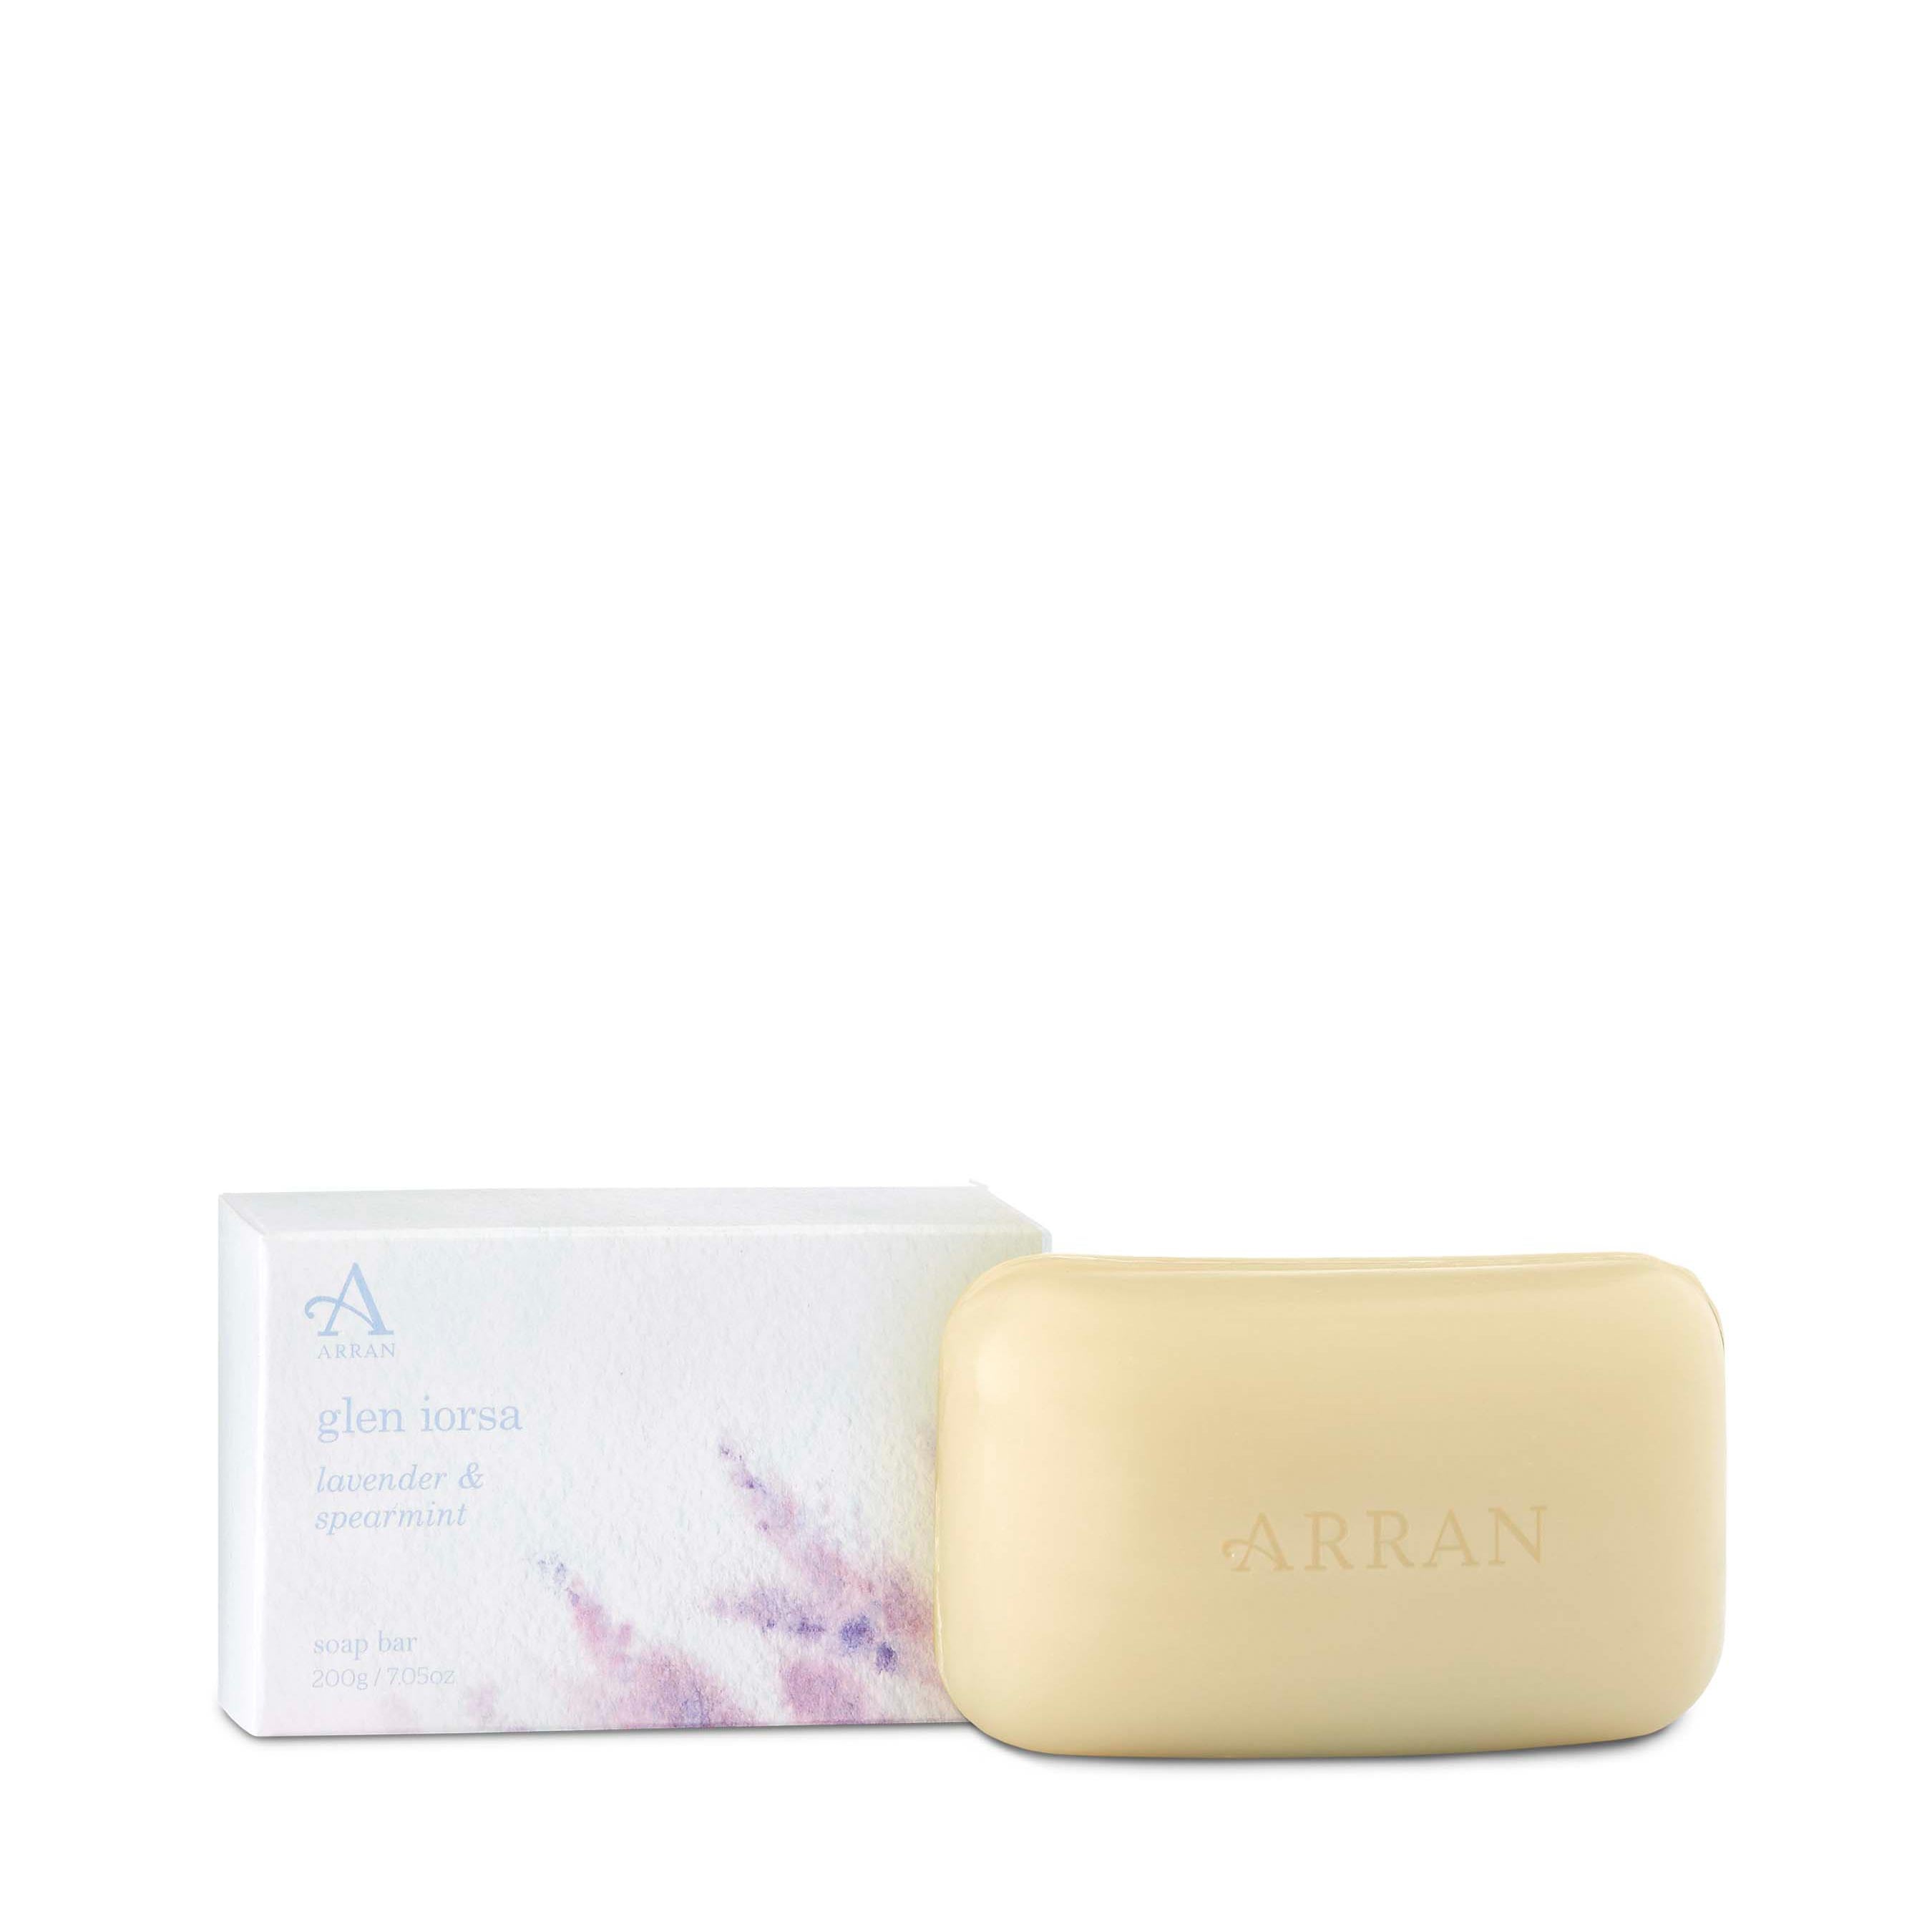 An image of ARRAN Glen Iorsa Lavender & Spearmint Soap Bar 200g | Made in Scotland | Lavende...